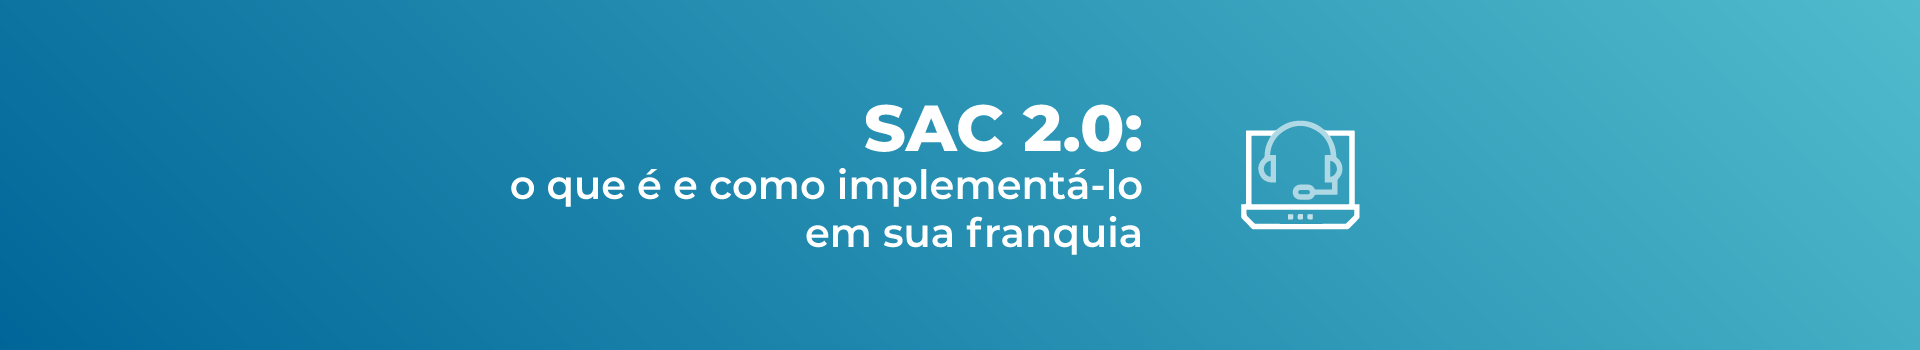 SAC 2.0